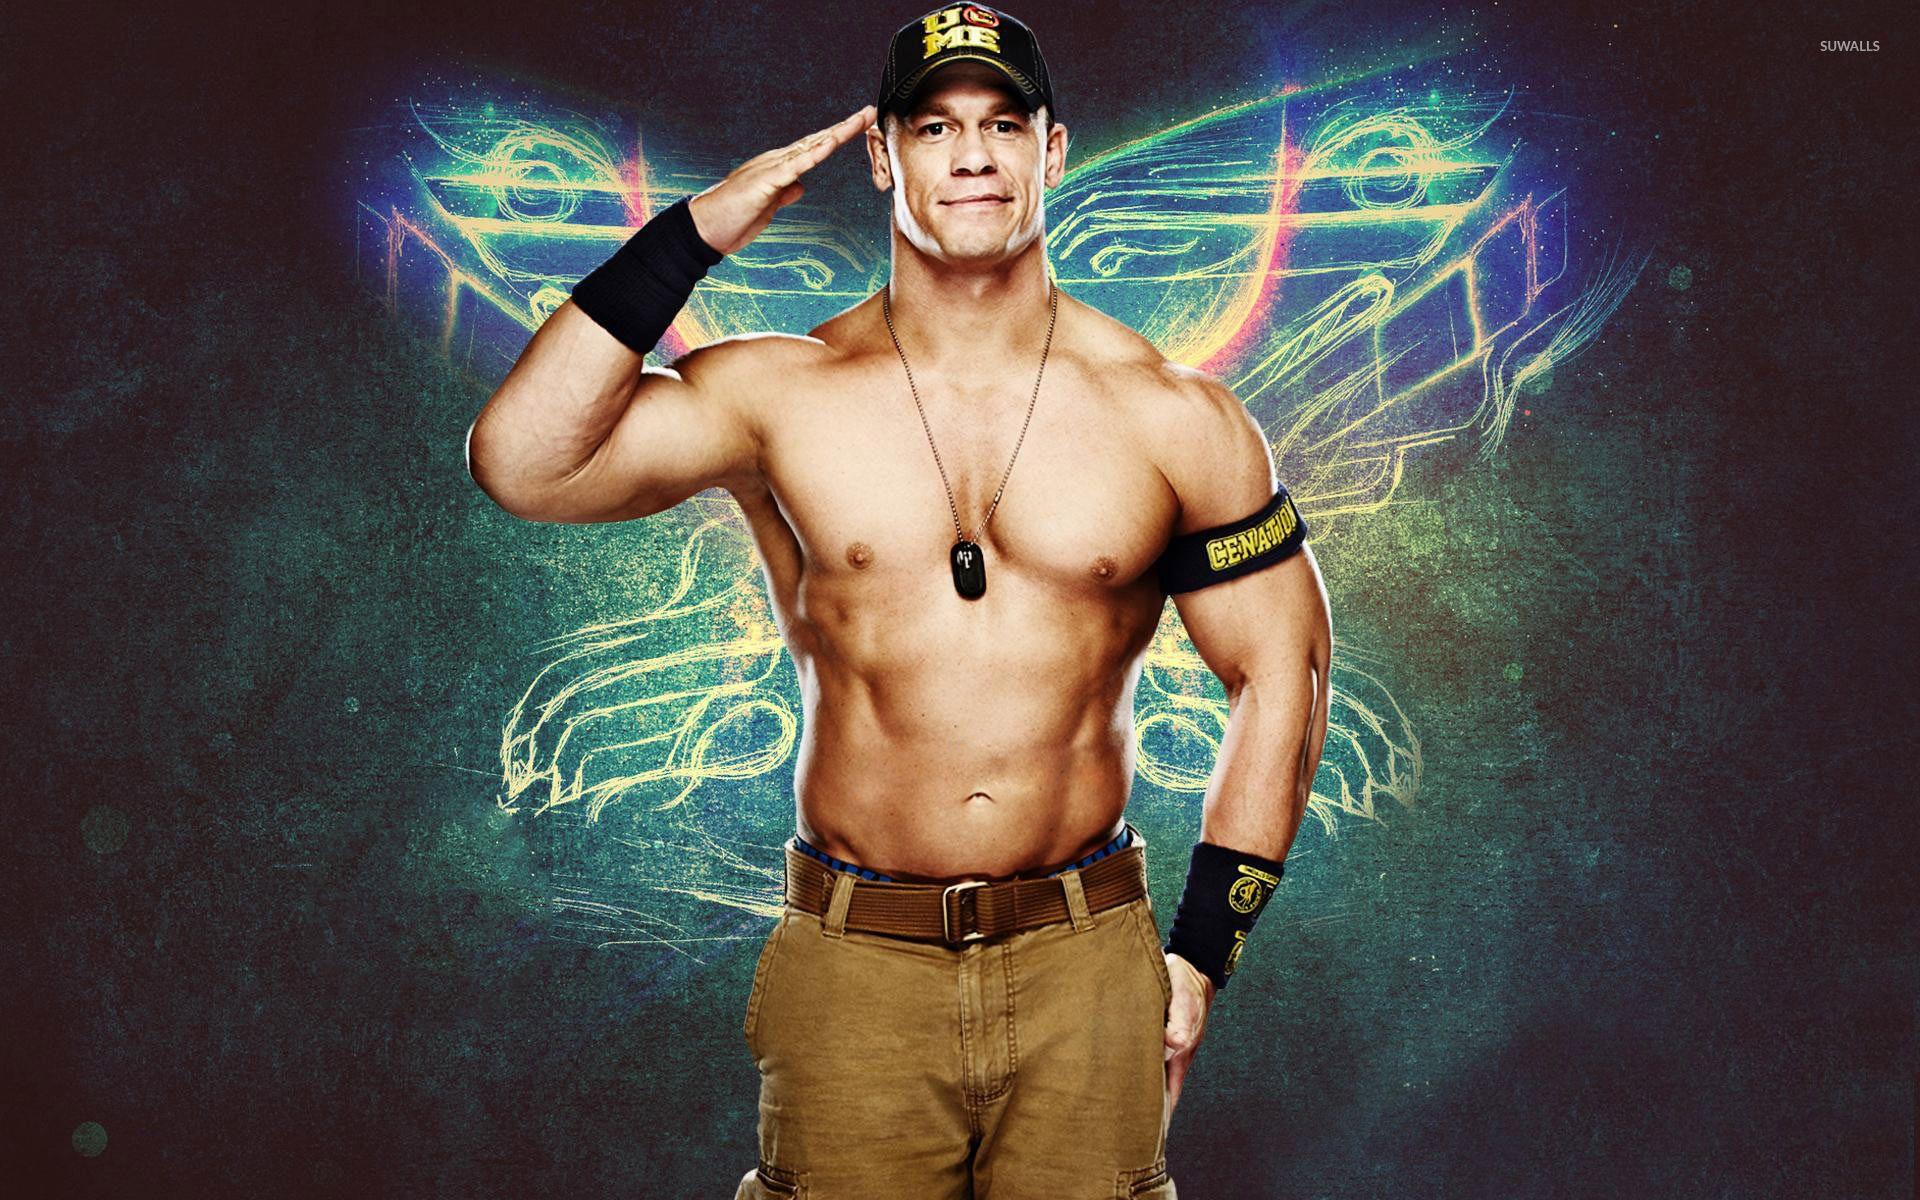 John Cena Wallpaper and Background Image